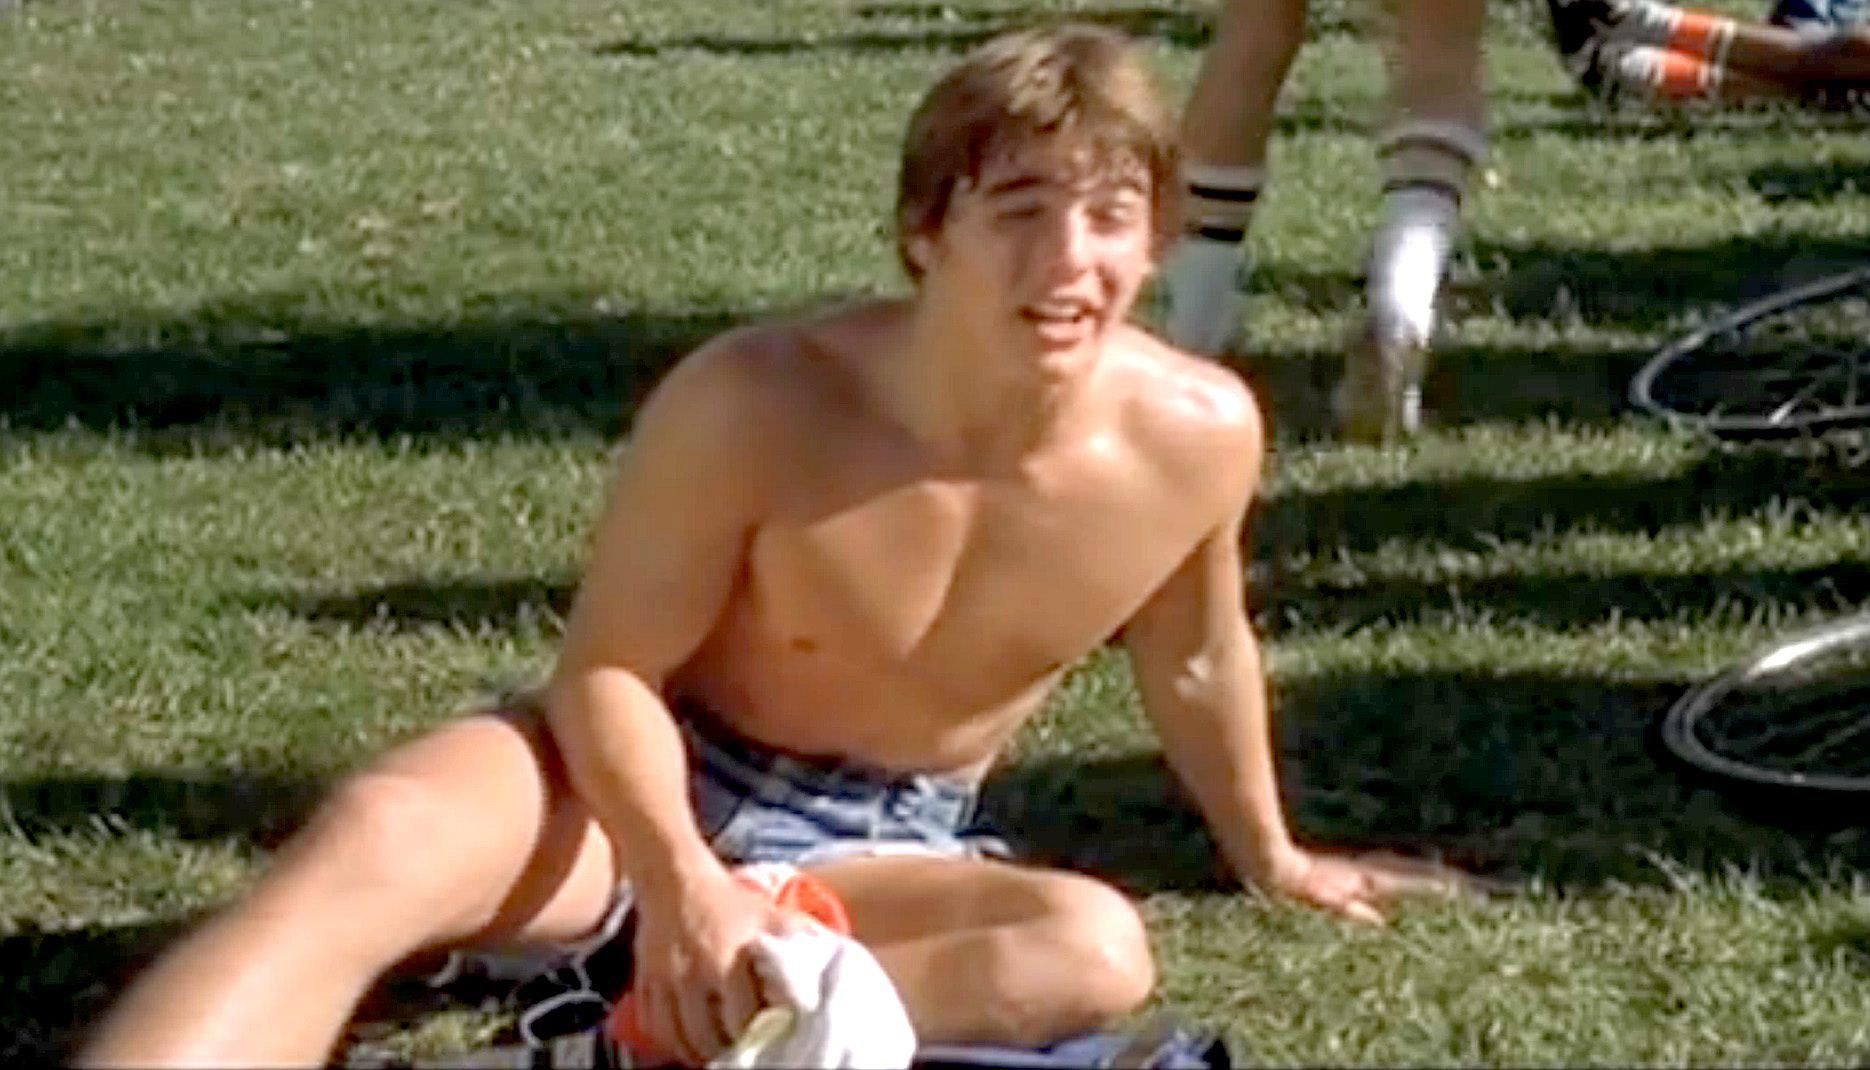 Filmdebuten I Franco Zeffirellis ”Endless love”, 1981, syns Tom Cruise i en mindre roll.